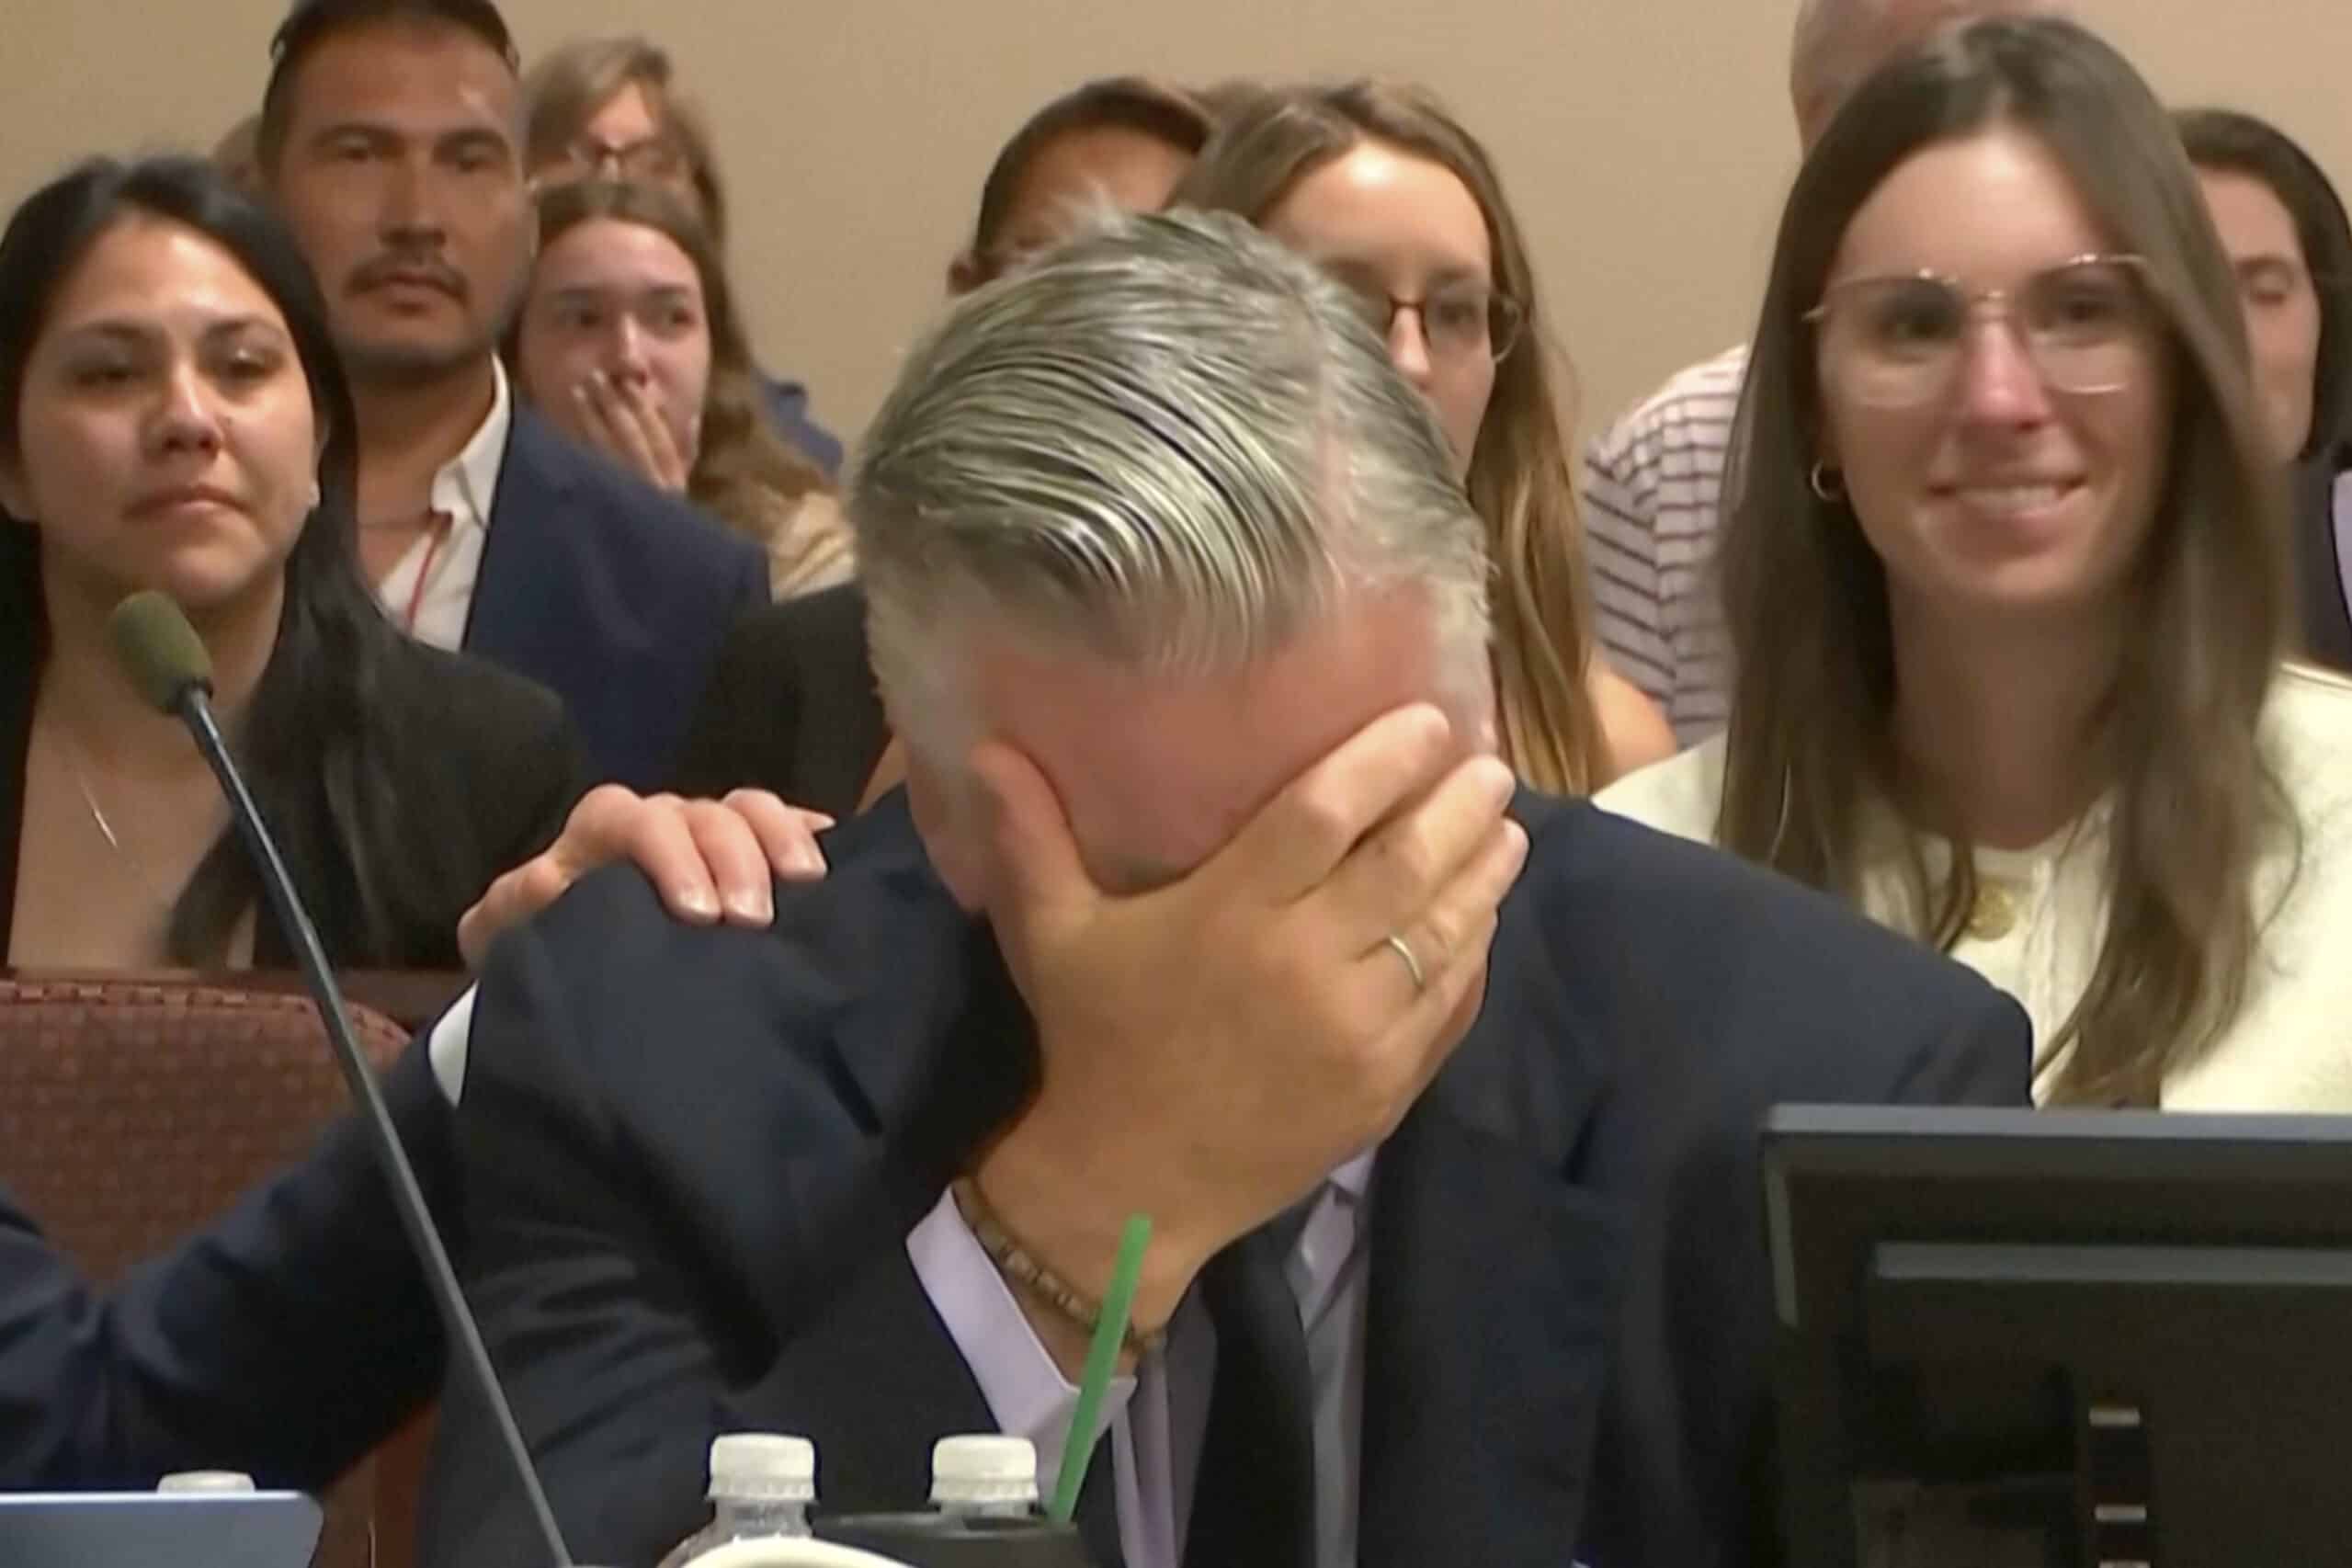 Alec Baldwin weeps as judge announces dismissal of involuntary manslaughter case vs him